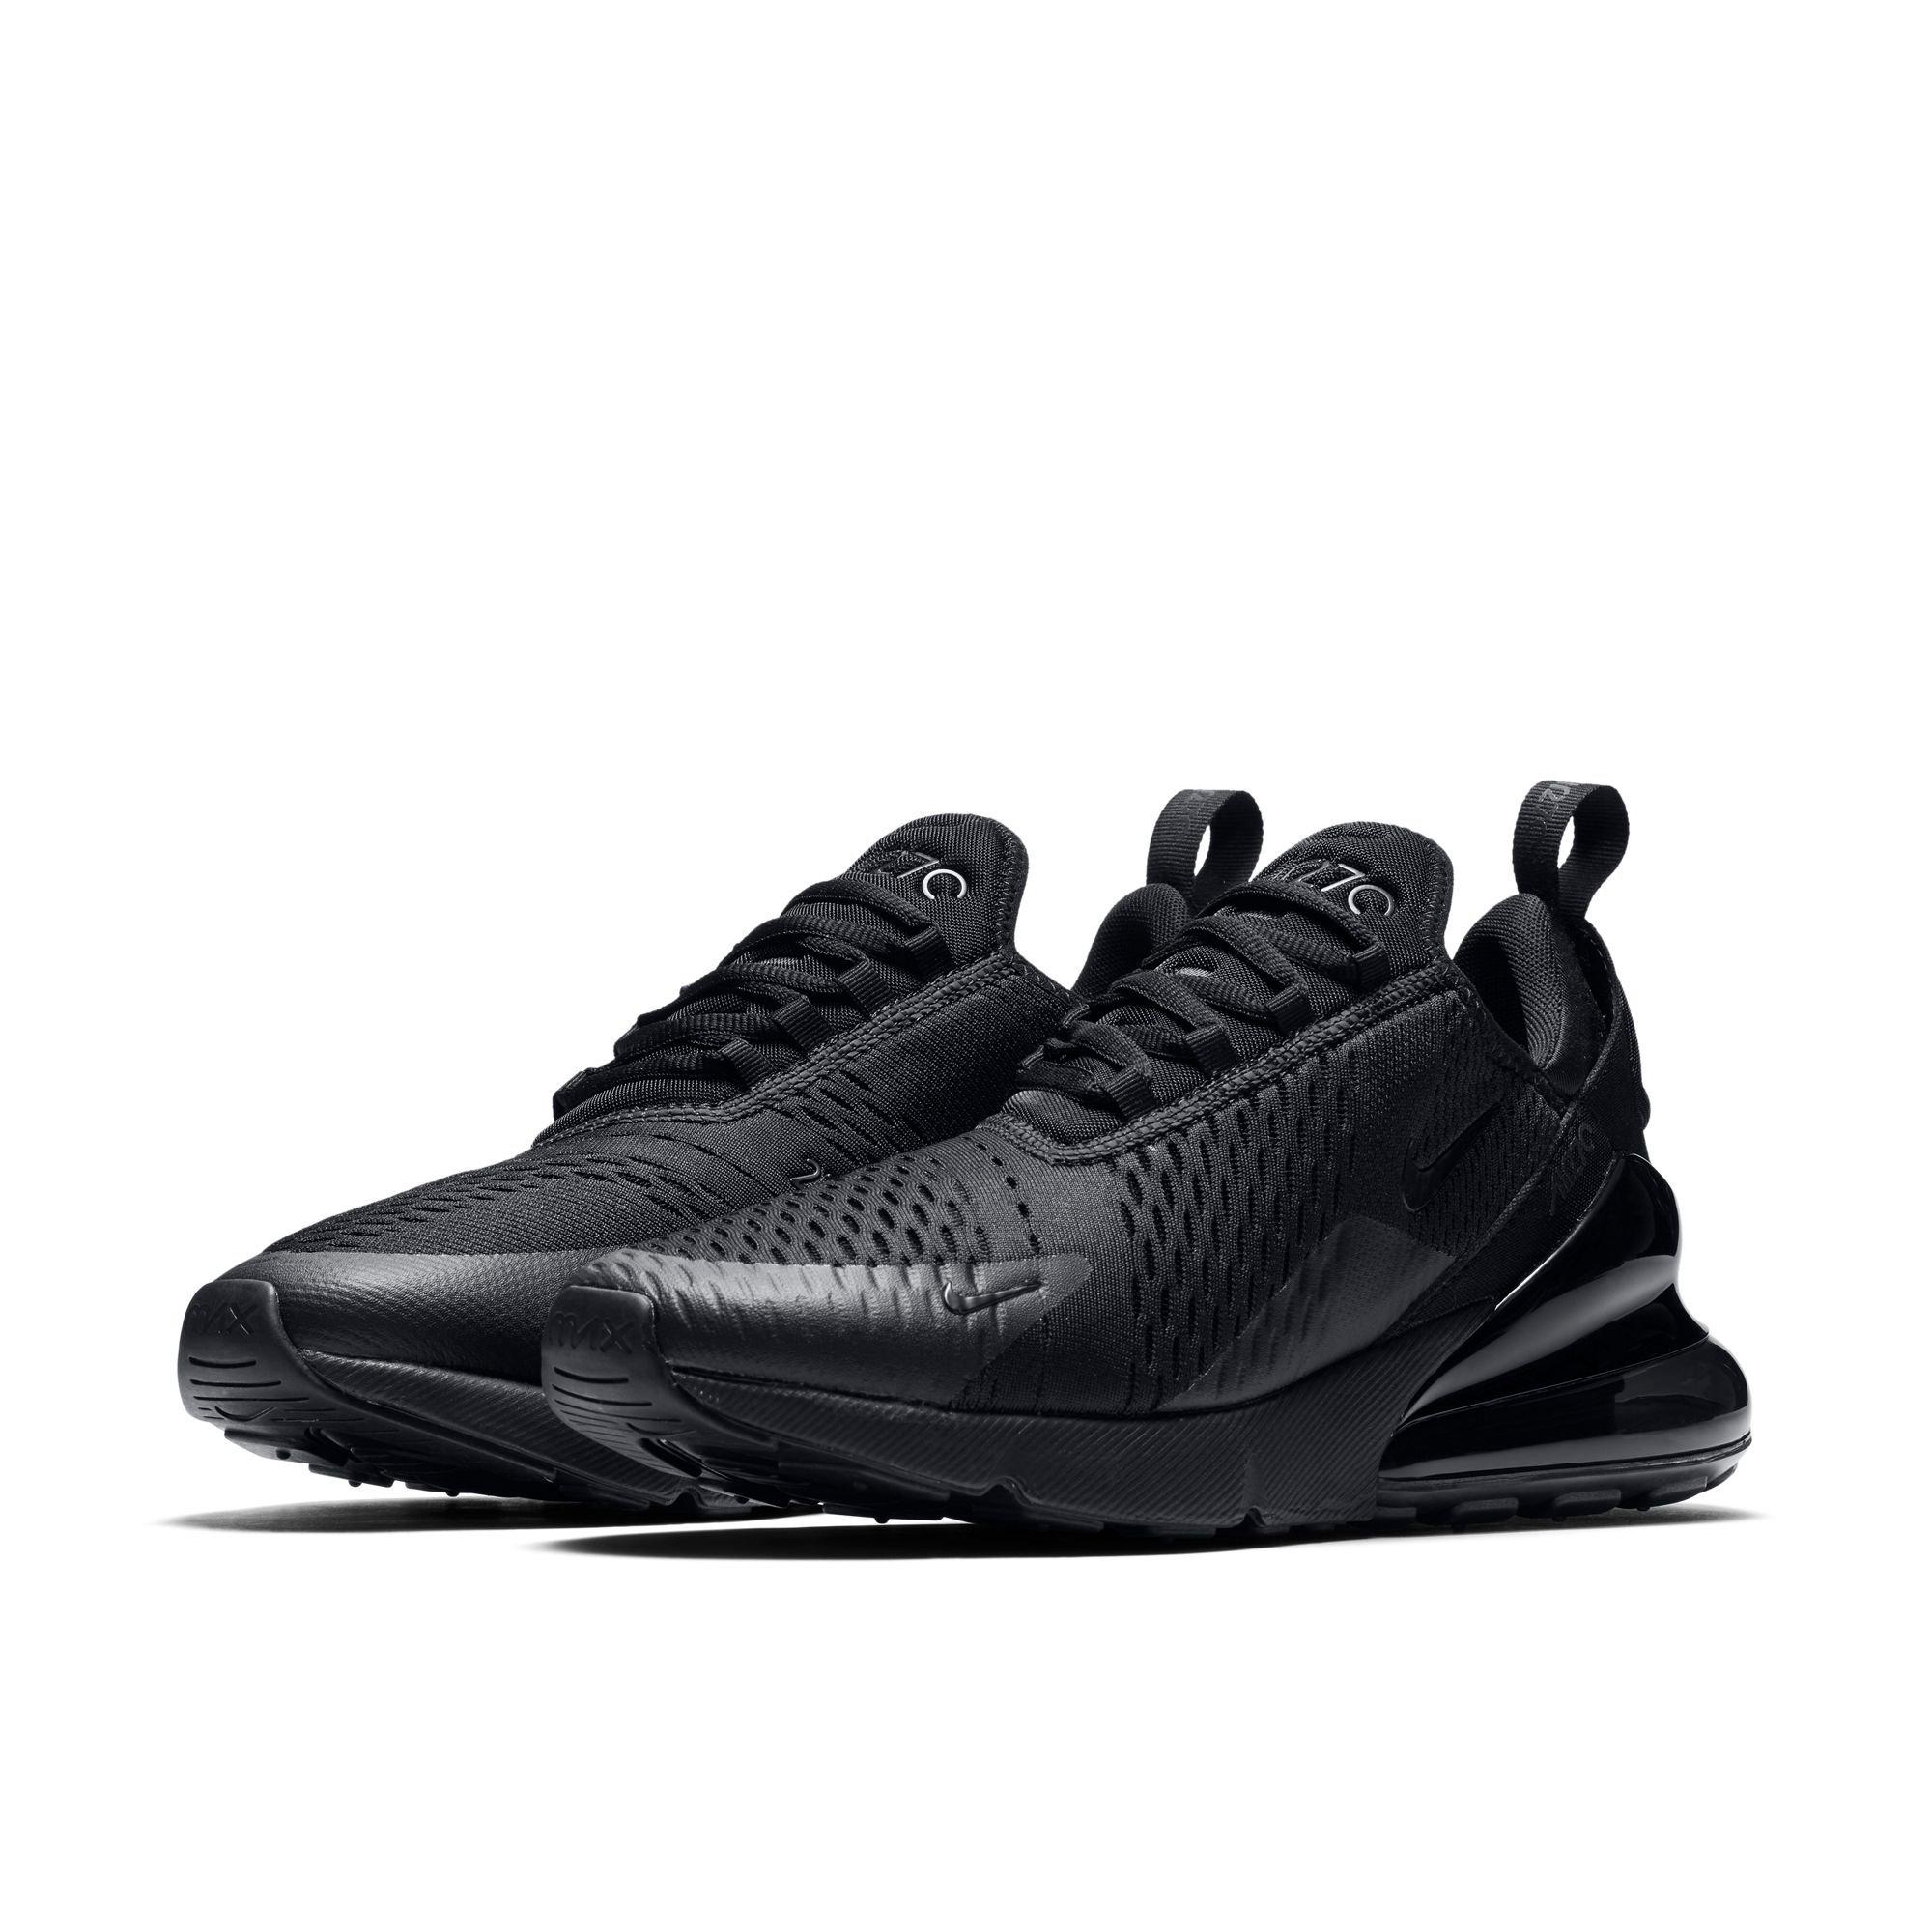 Nike Air Max "Black" Shoe